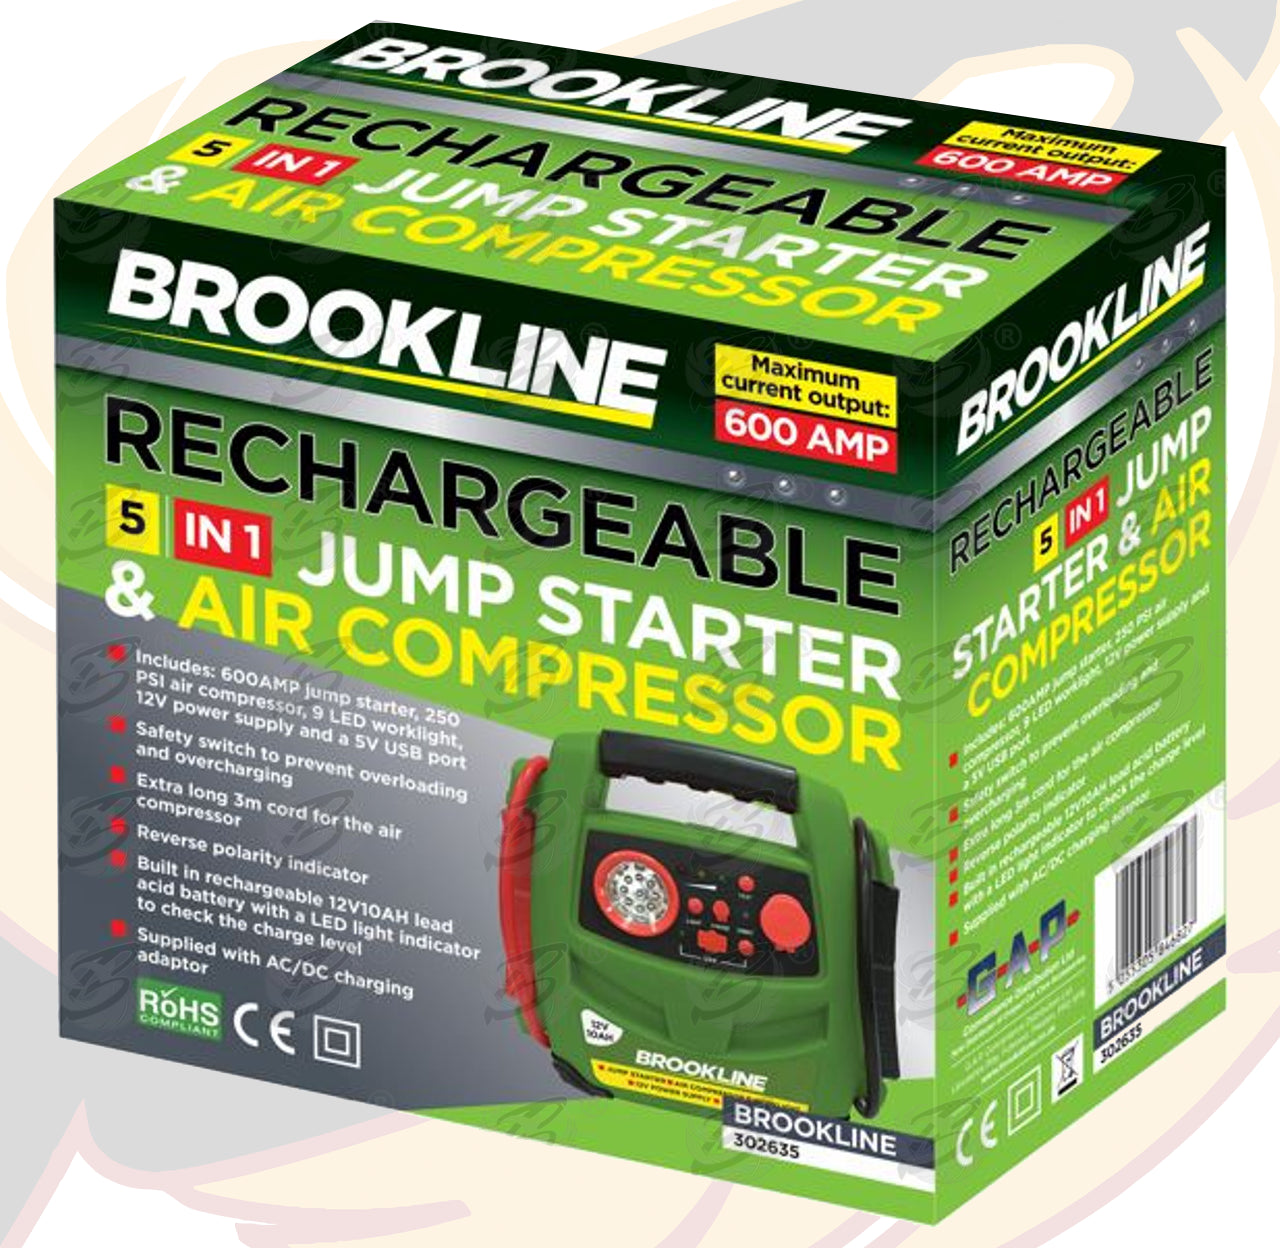 BROOKLINE 600AMP RECHARGEABLE JUMP STARTER & COMPRESSOR ( 5 IN 1 )